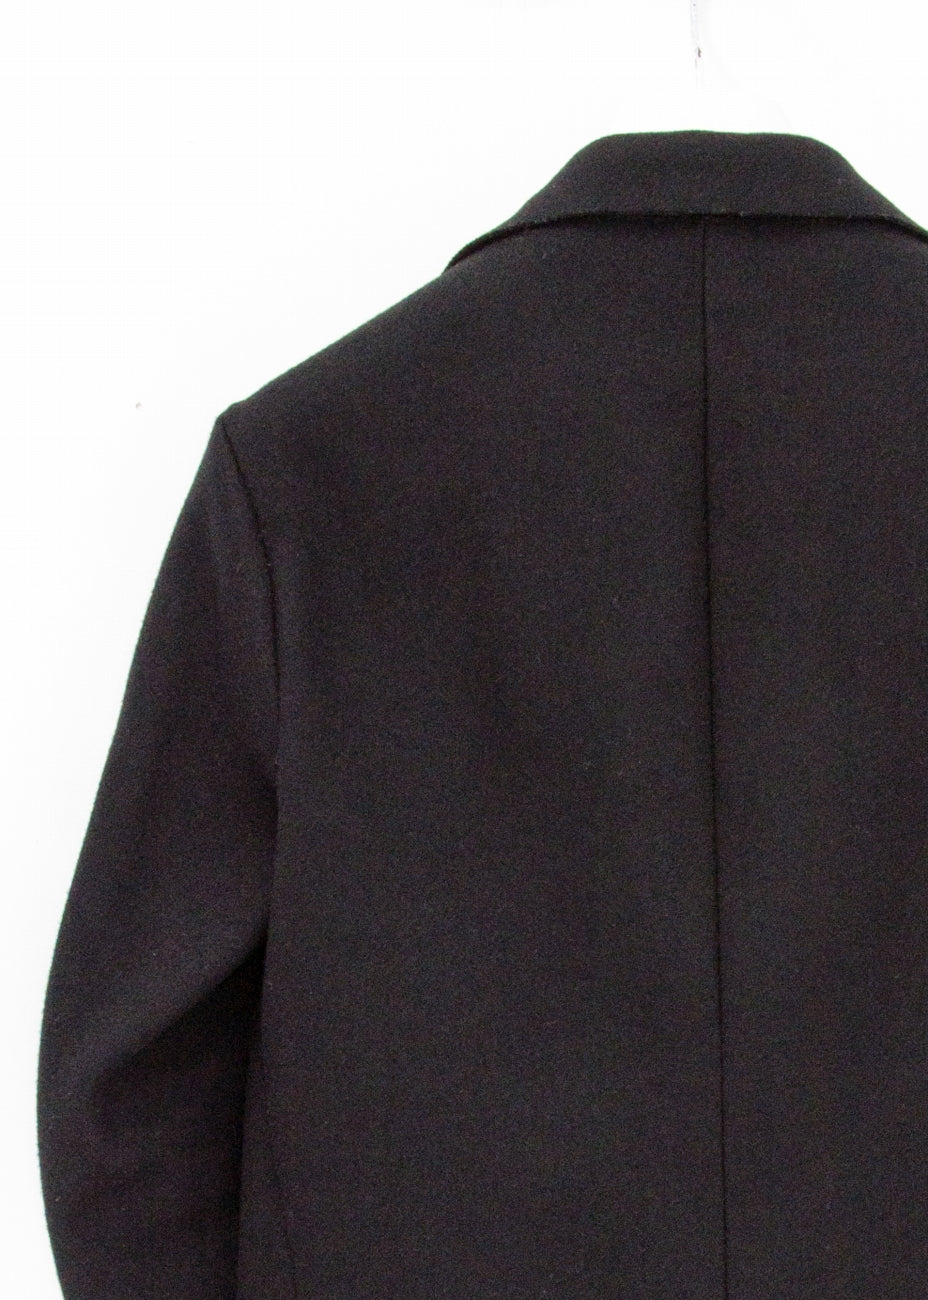 ma+ ワンピースウールテーラードジャケット ウール 表記なし  黒 テーラードジャケット